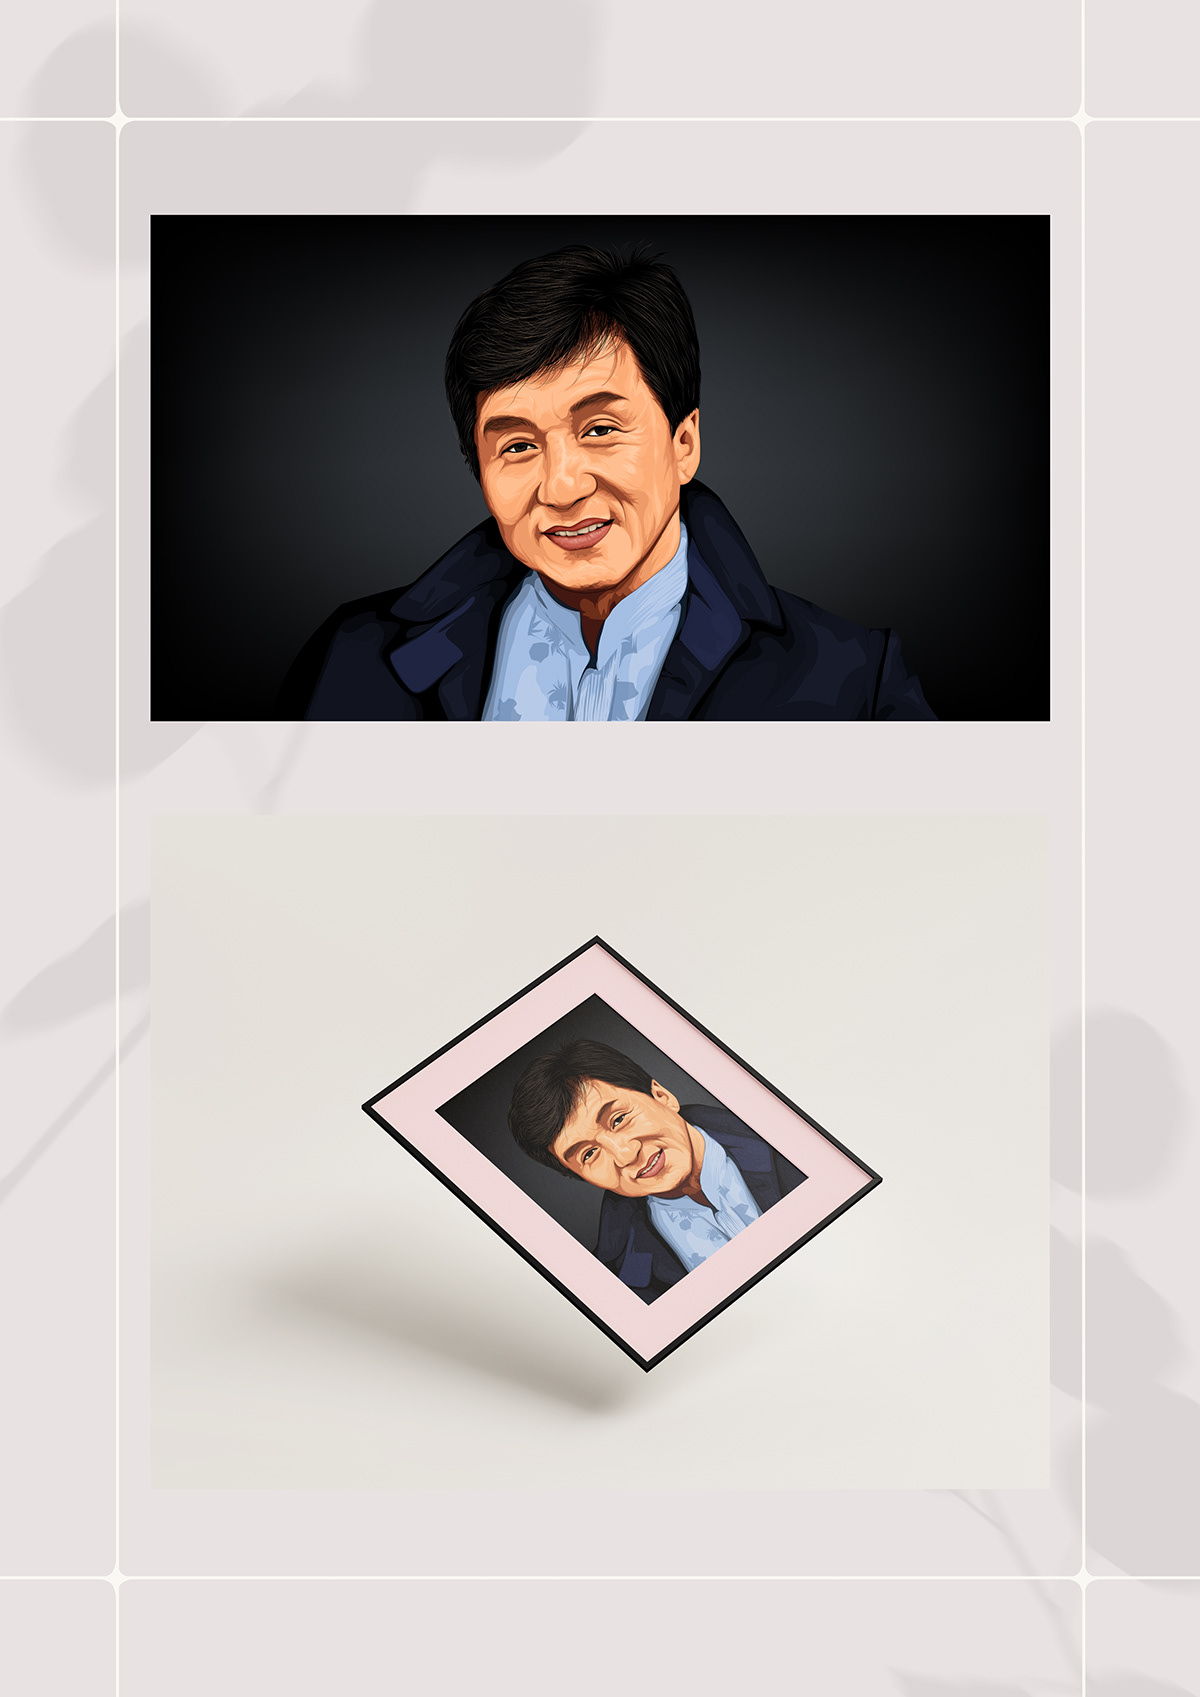 Jackie Chan Digital Art  ILLUSTRATION  adobe illustrator vector art portrait portrait illustration artwork art direction  Fashion 